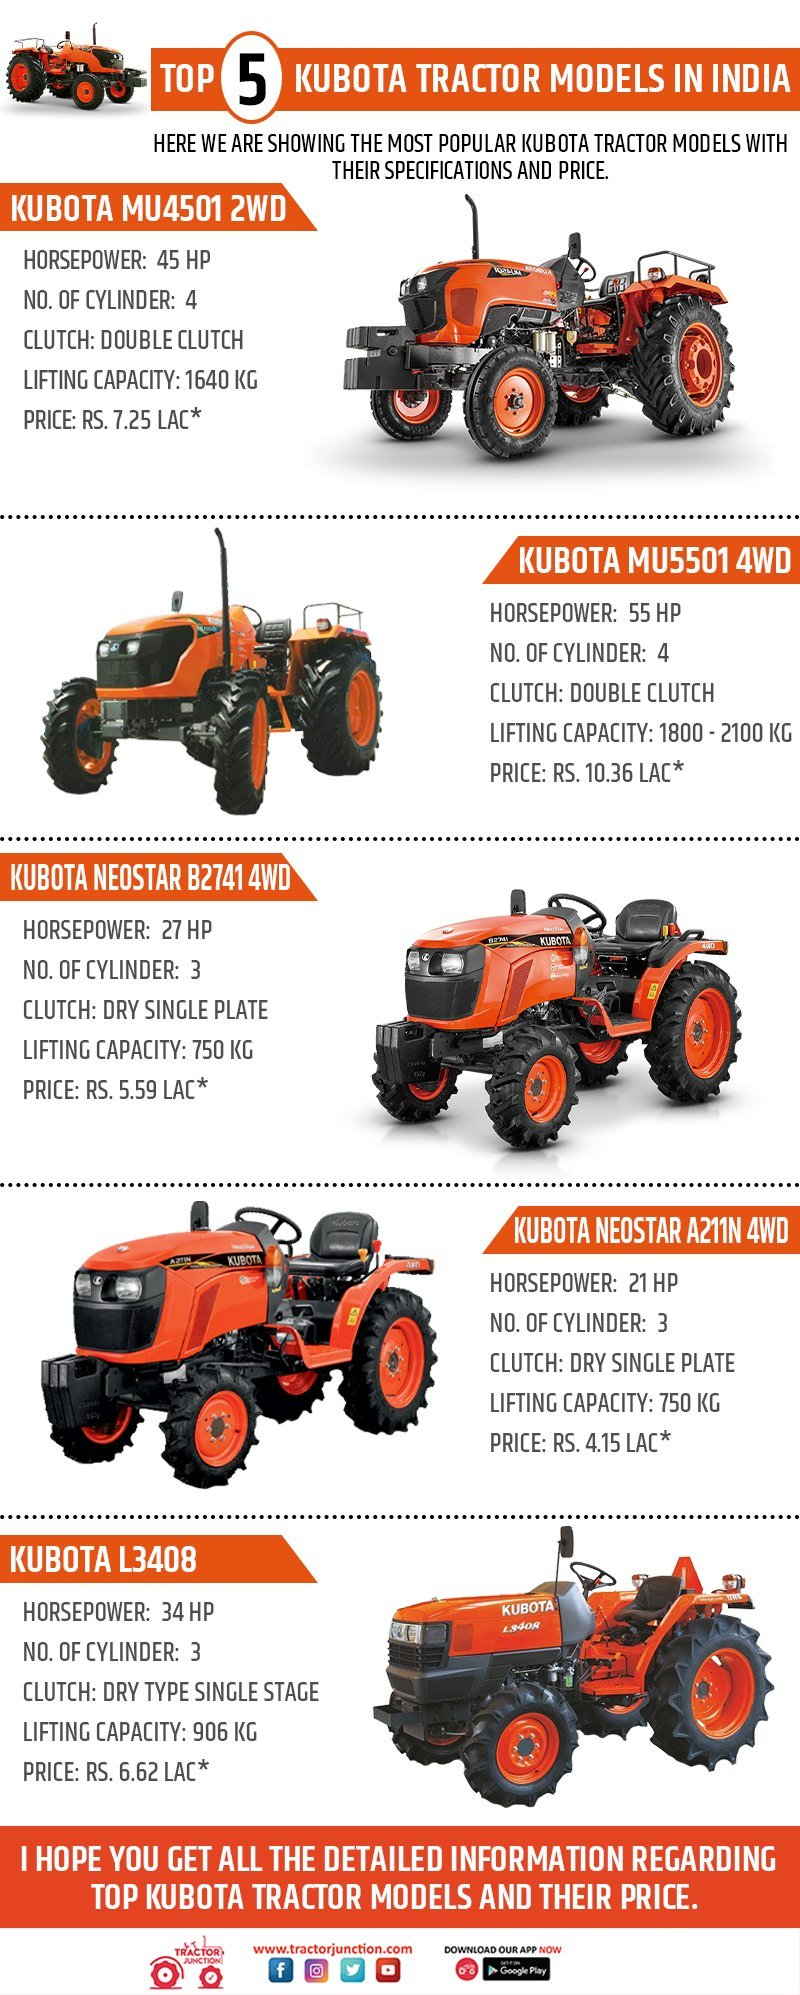 Top 5 Kubota Tractor Models in India